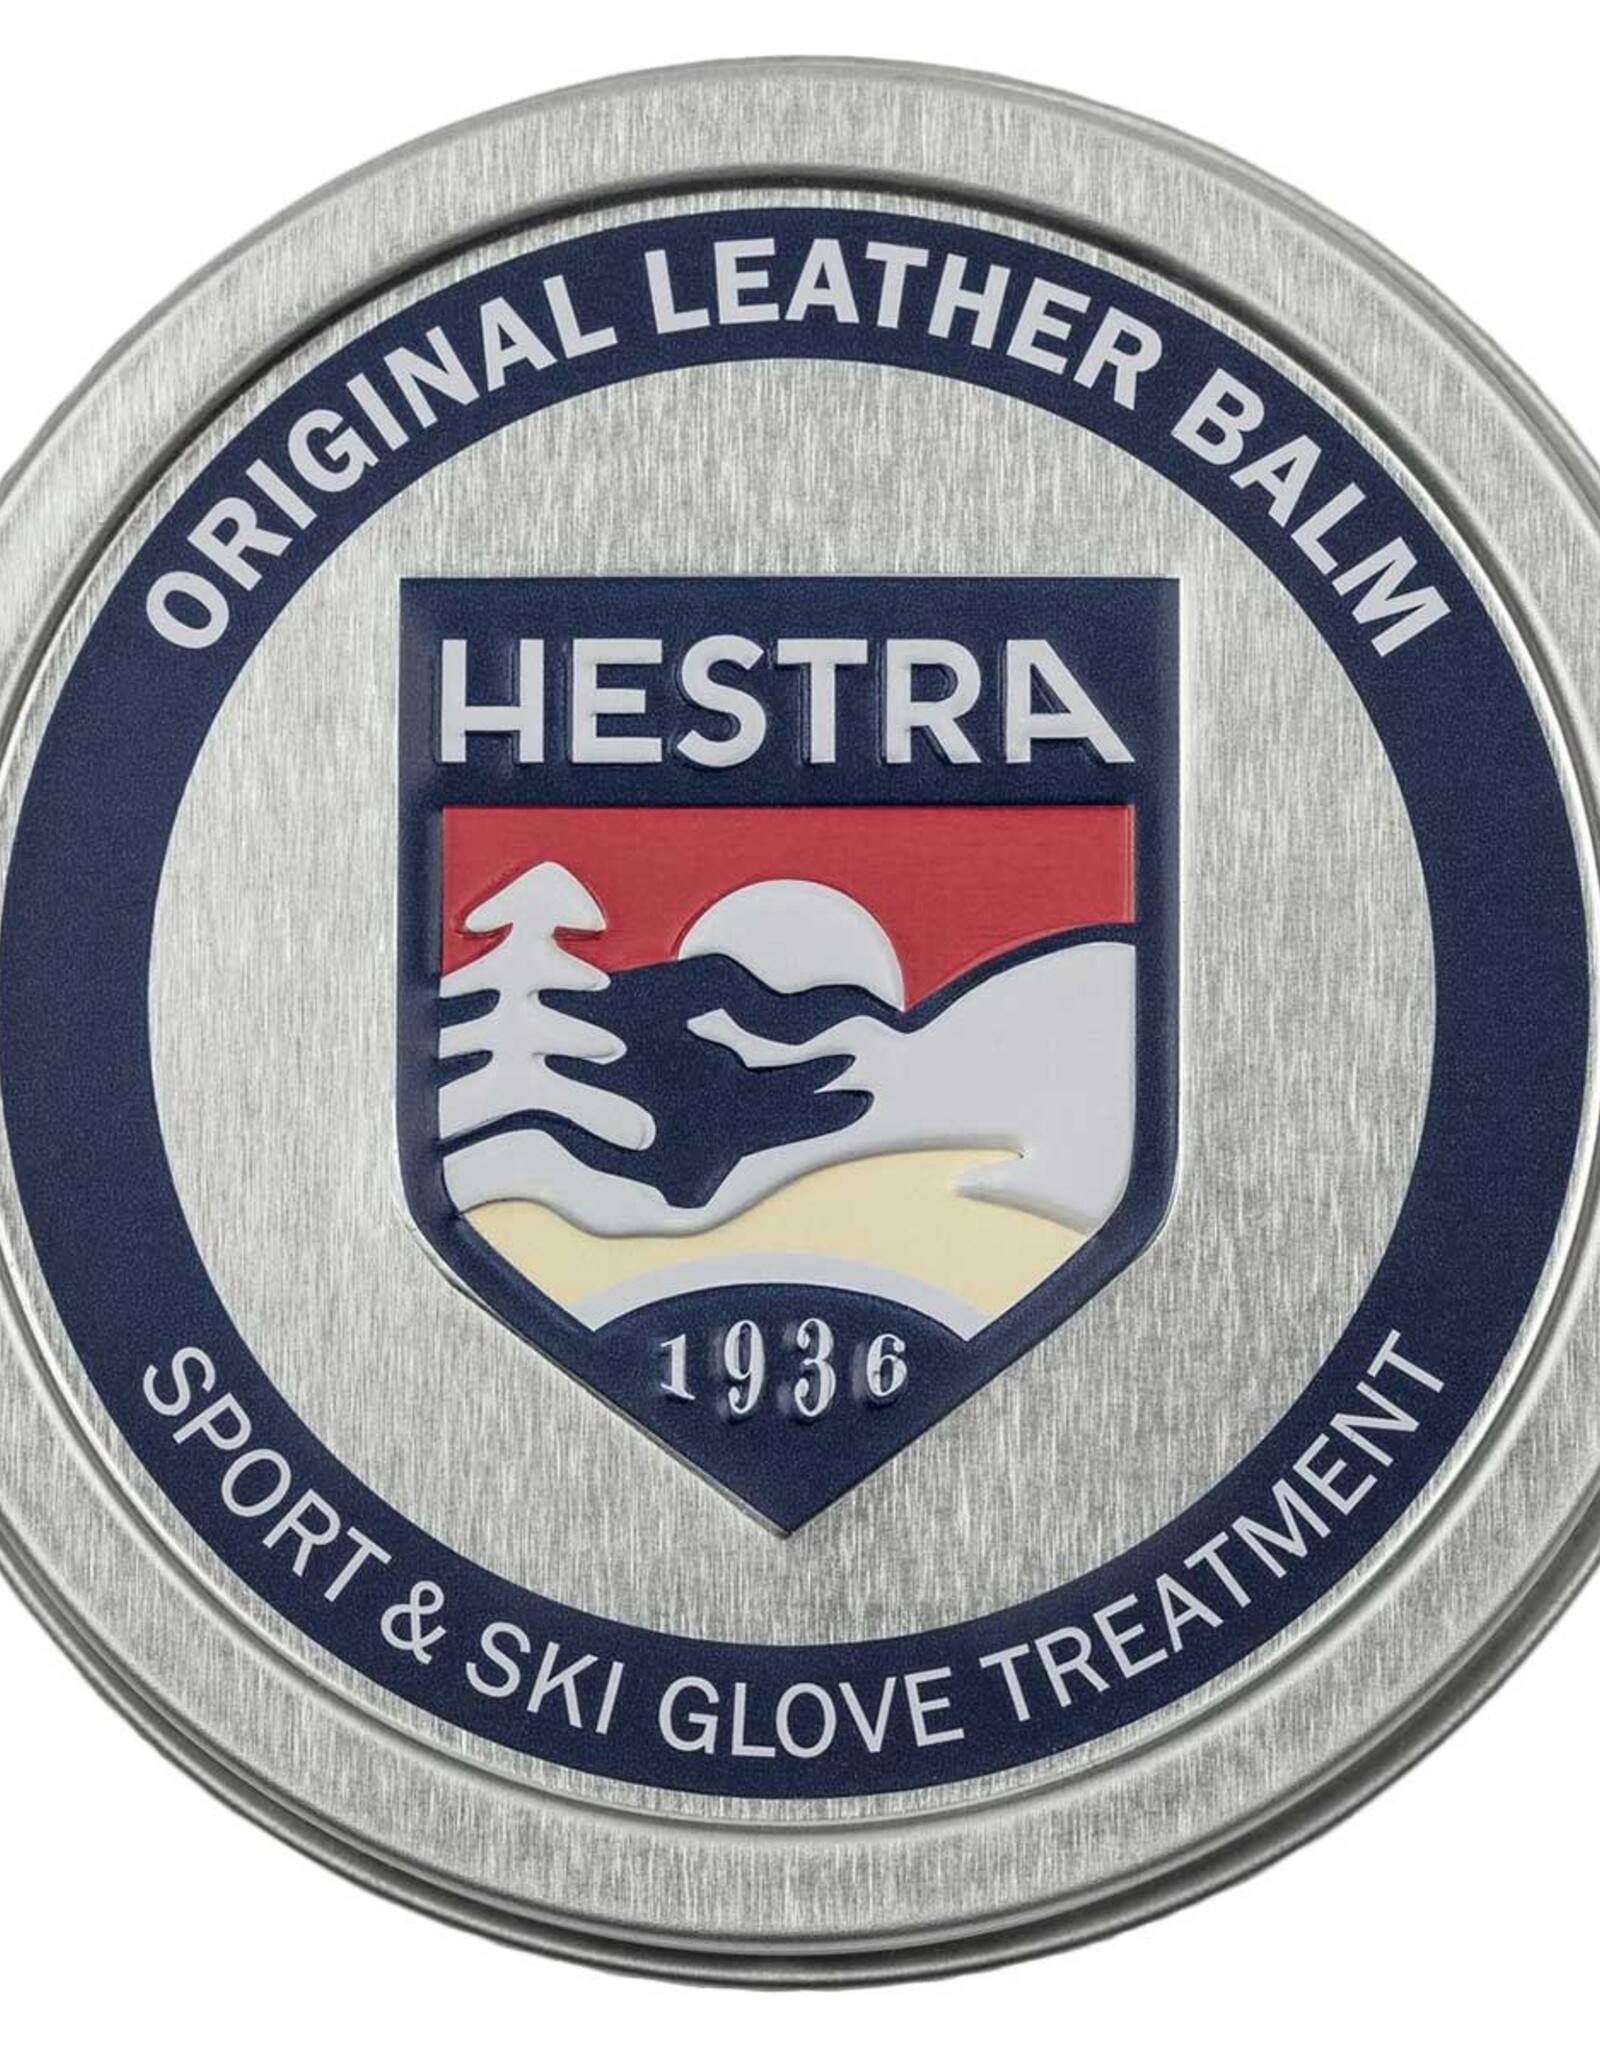 Hestra HESTRA Original Leather Balm Tin